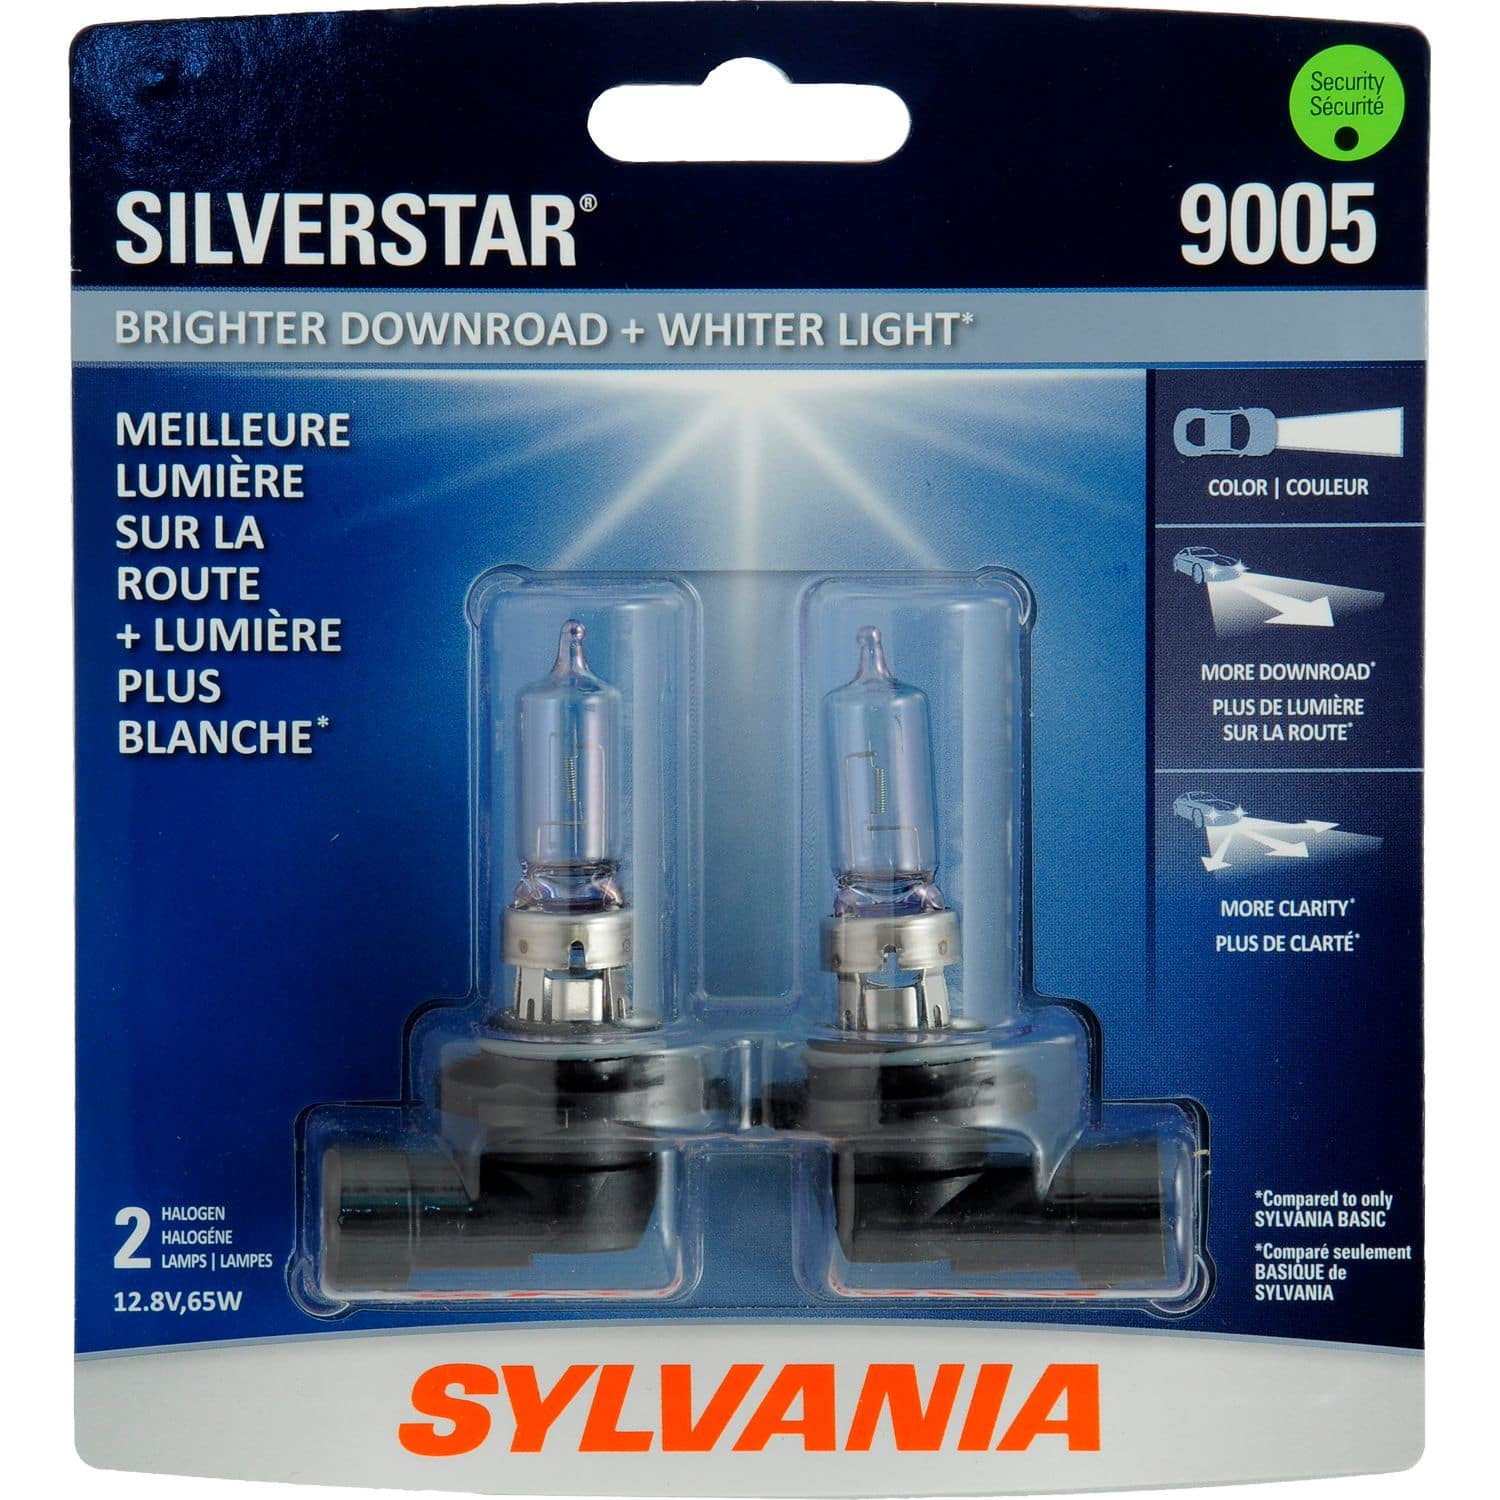 9005 Sylvania SilverStar® Halogen Headlight Bulb, Whiter Light, 2-pk